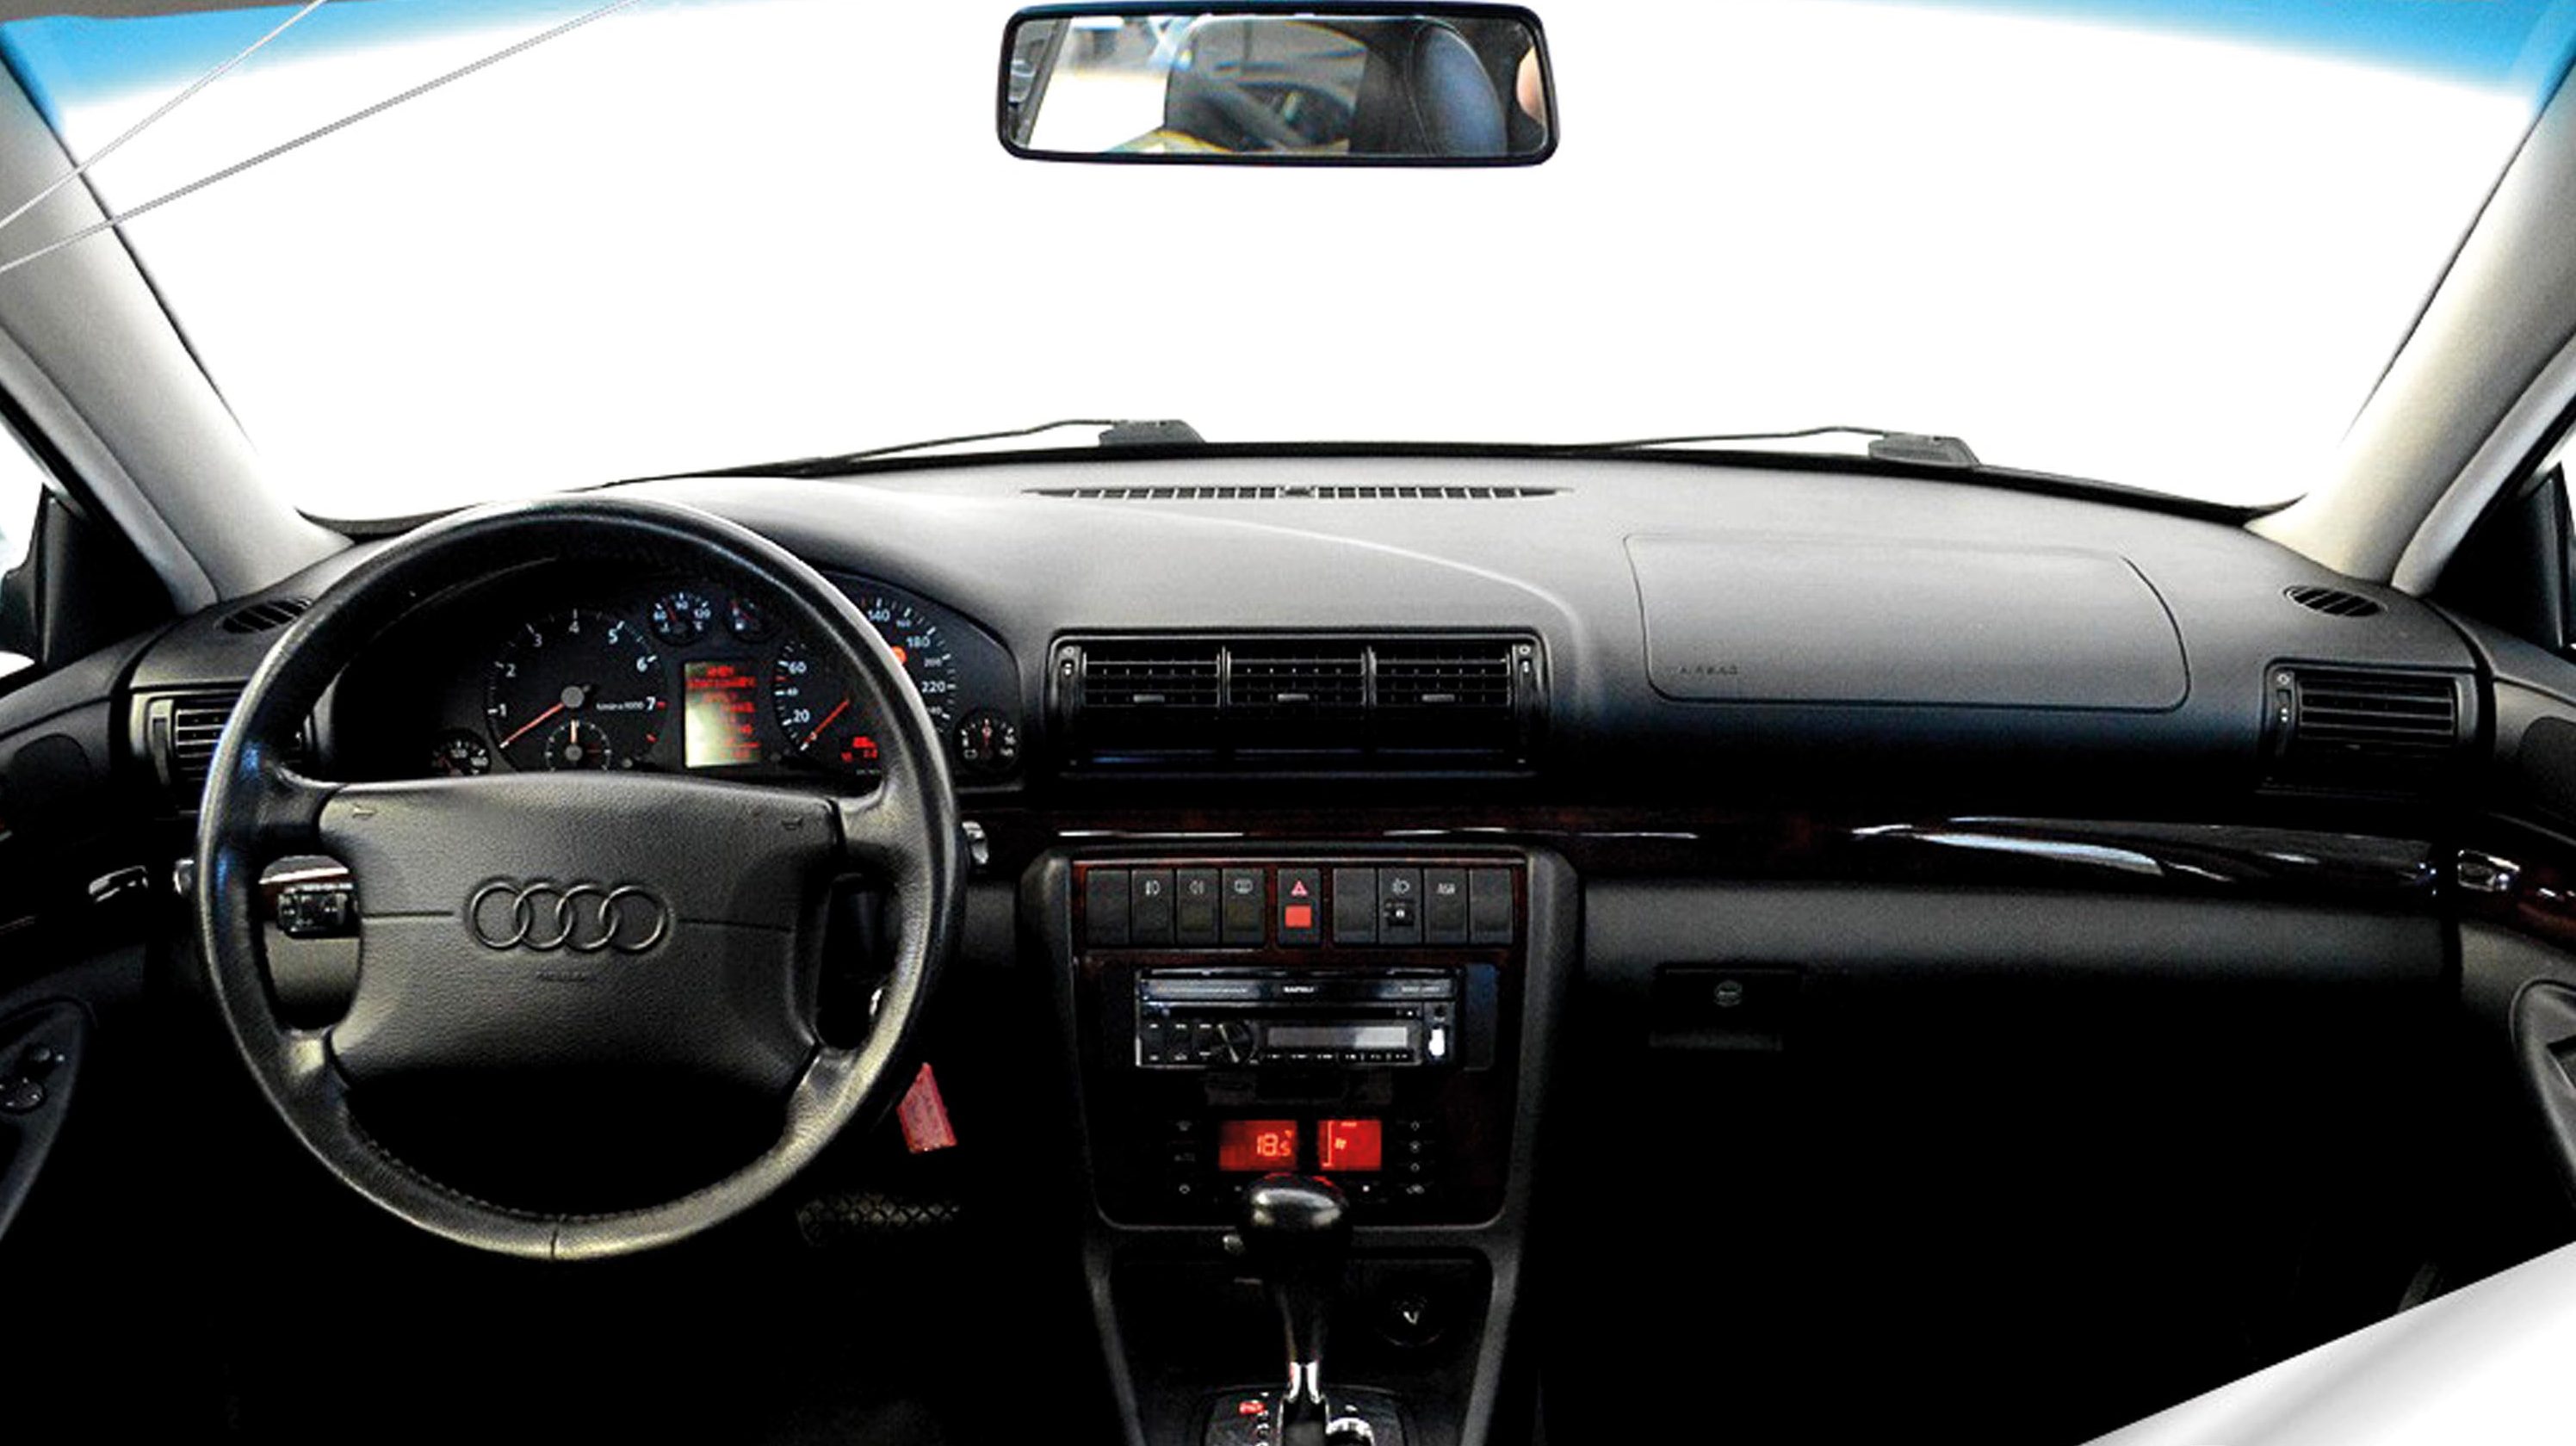 Audi A4 B5 interior